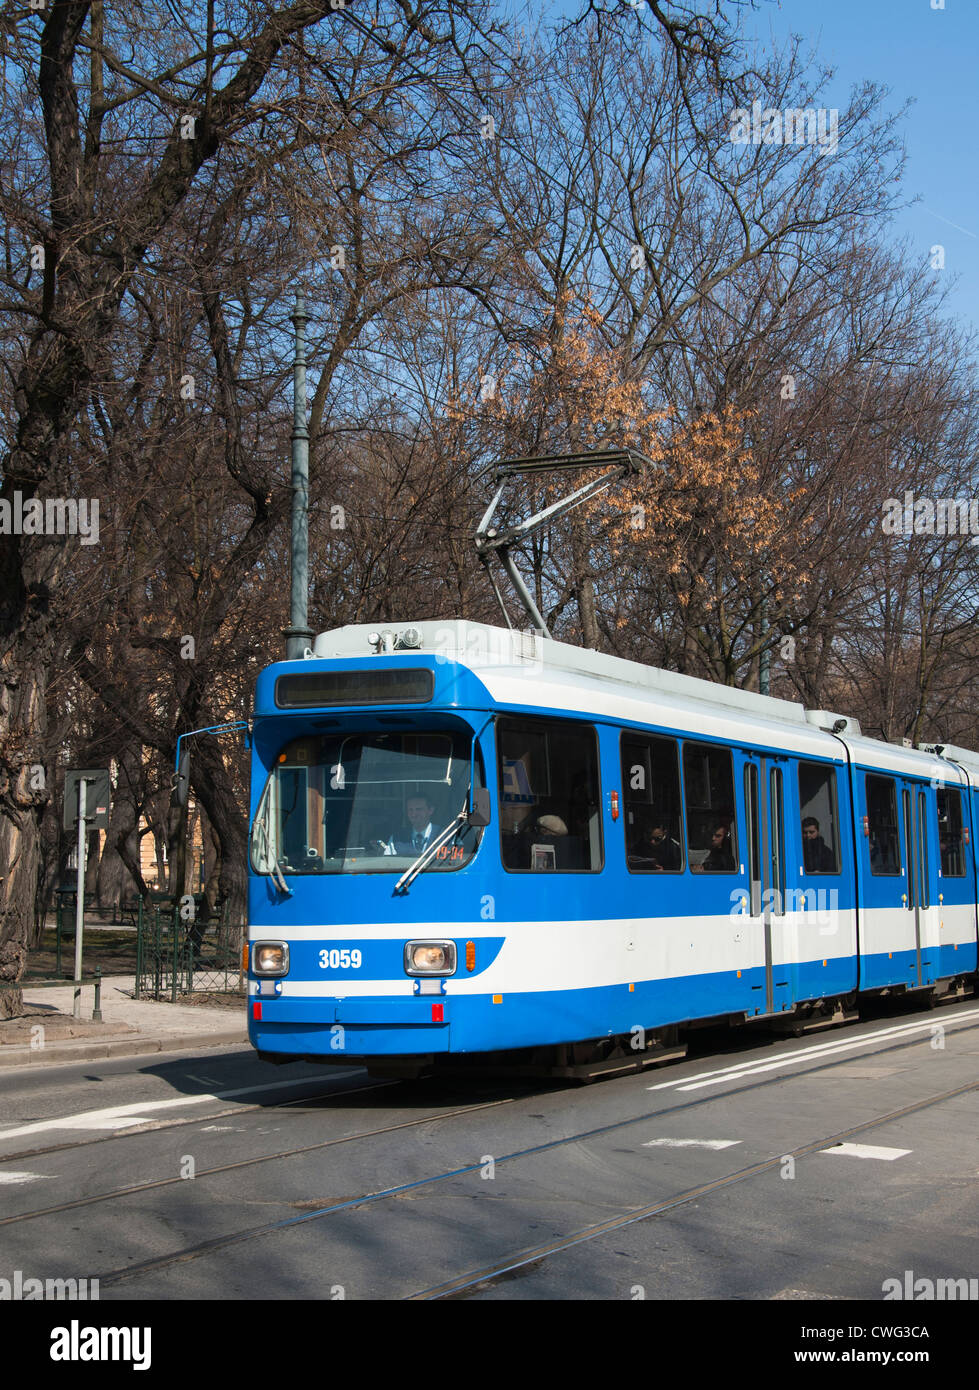 A krakow tram withg no destination displayed Stock Photo